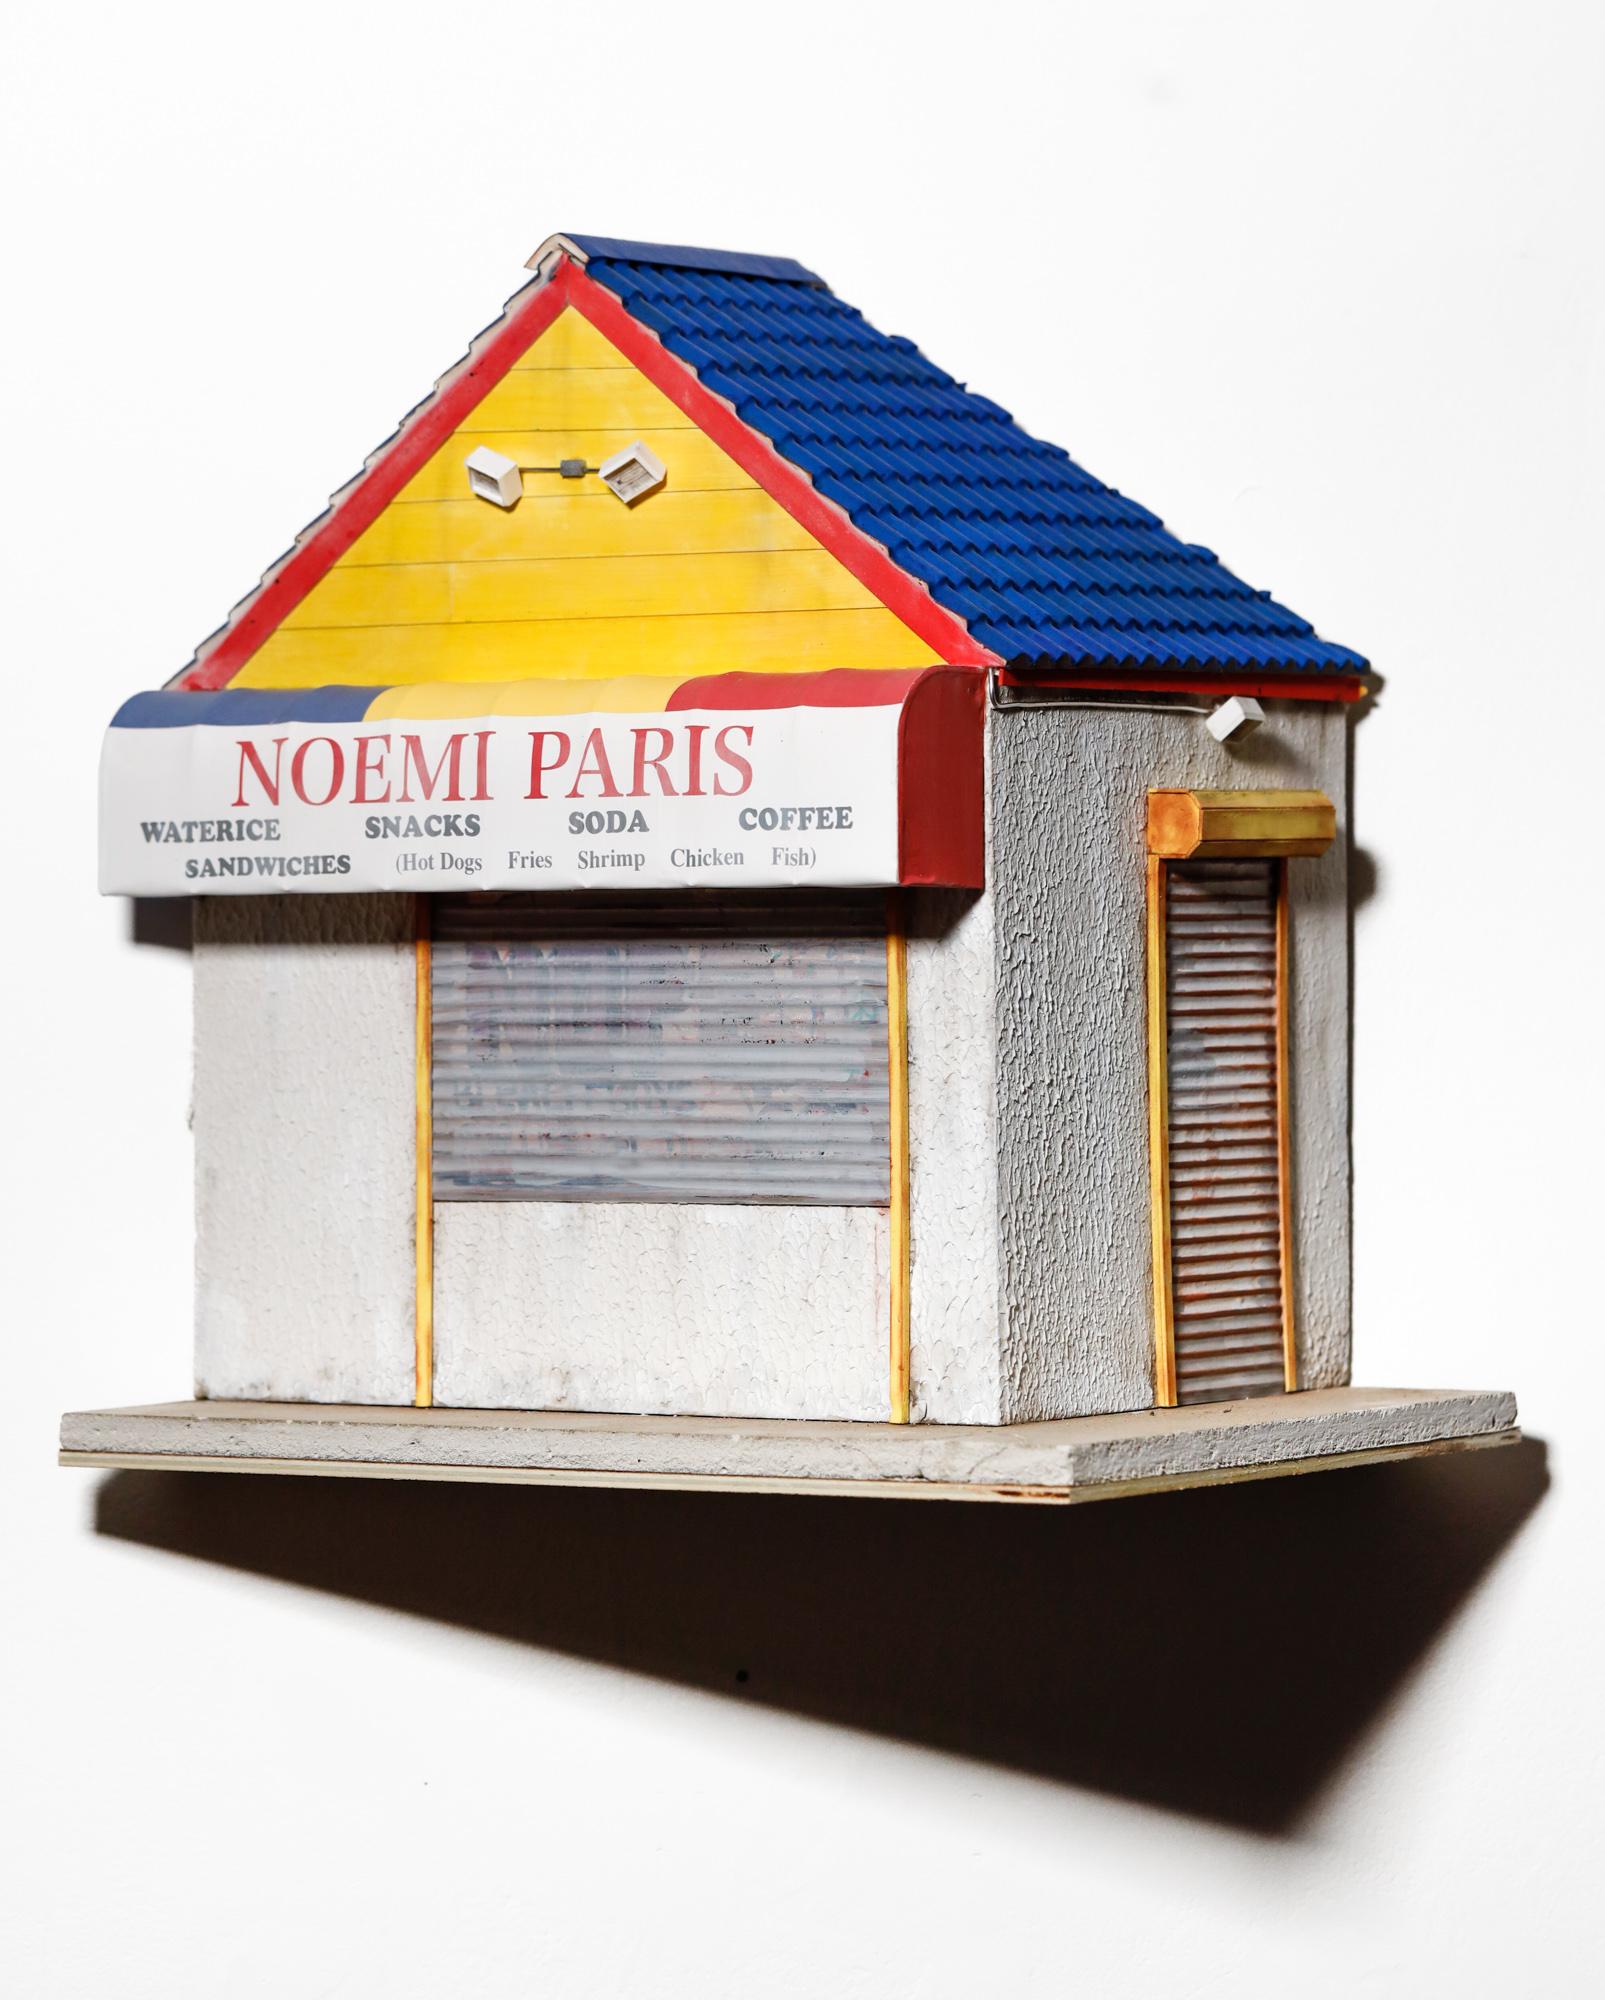 "Noemi Paris" Hyperrealistische Miniatur, Architektur, Gebäude, Stadtbild